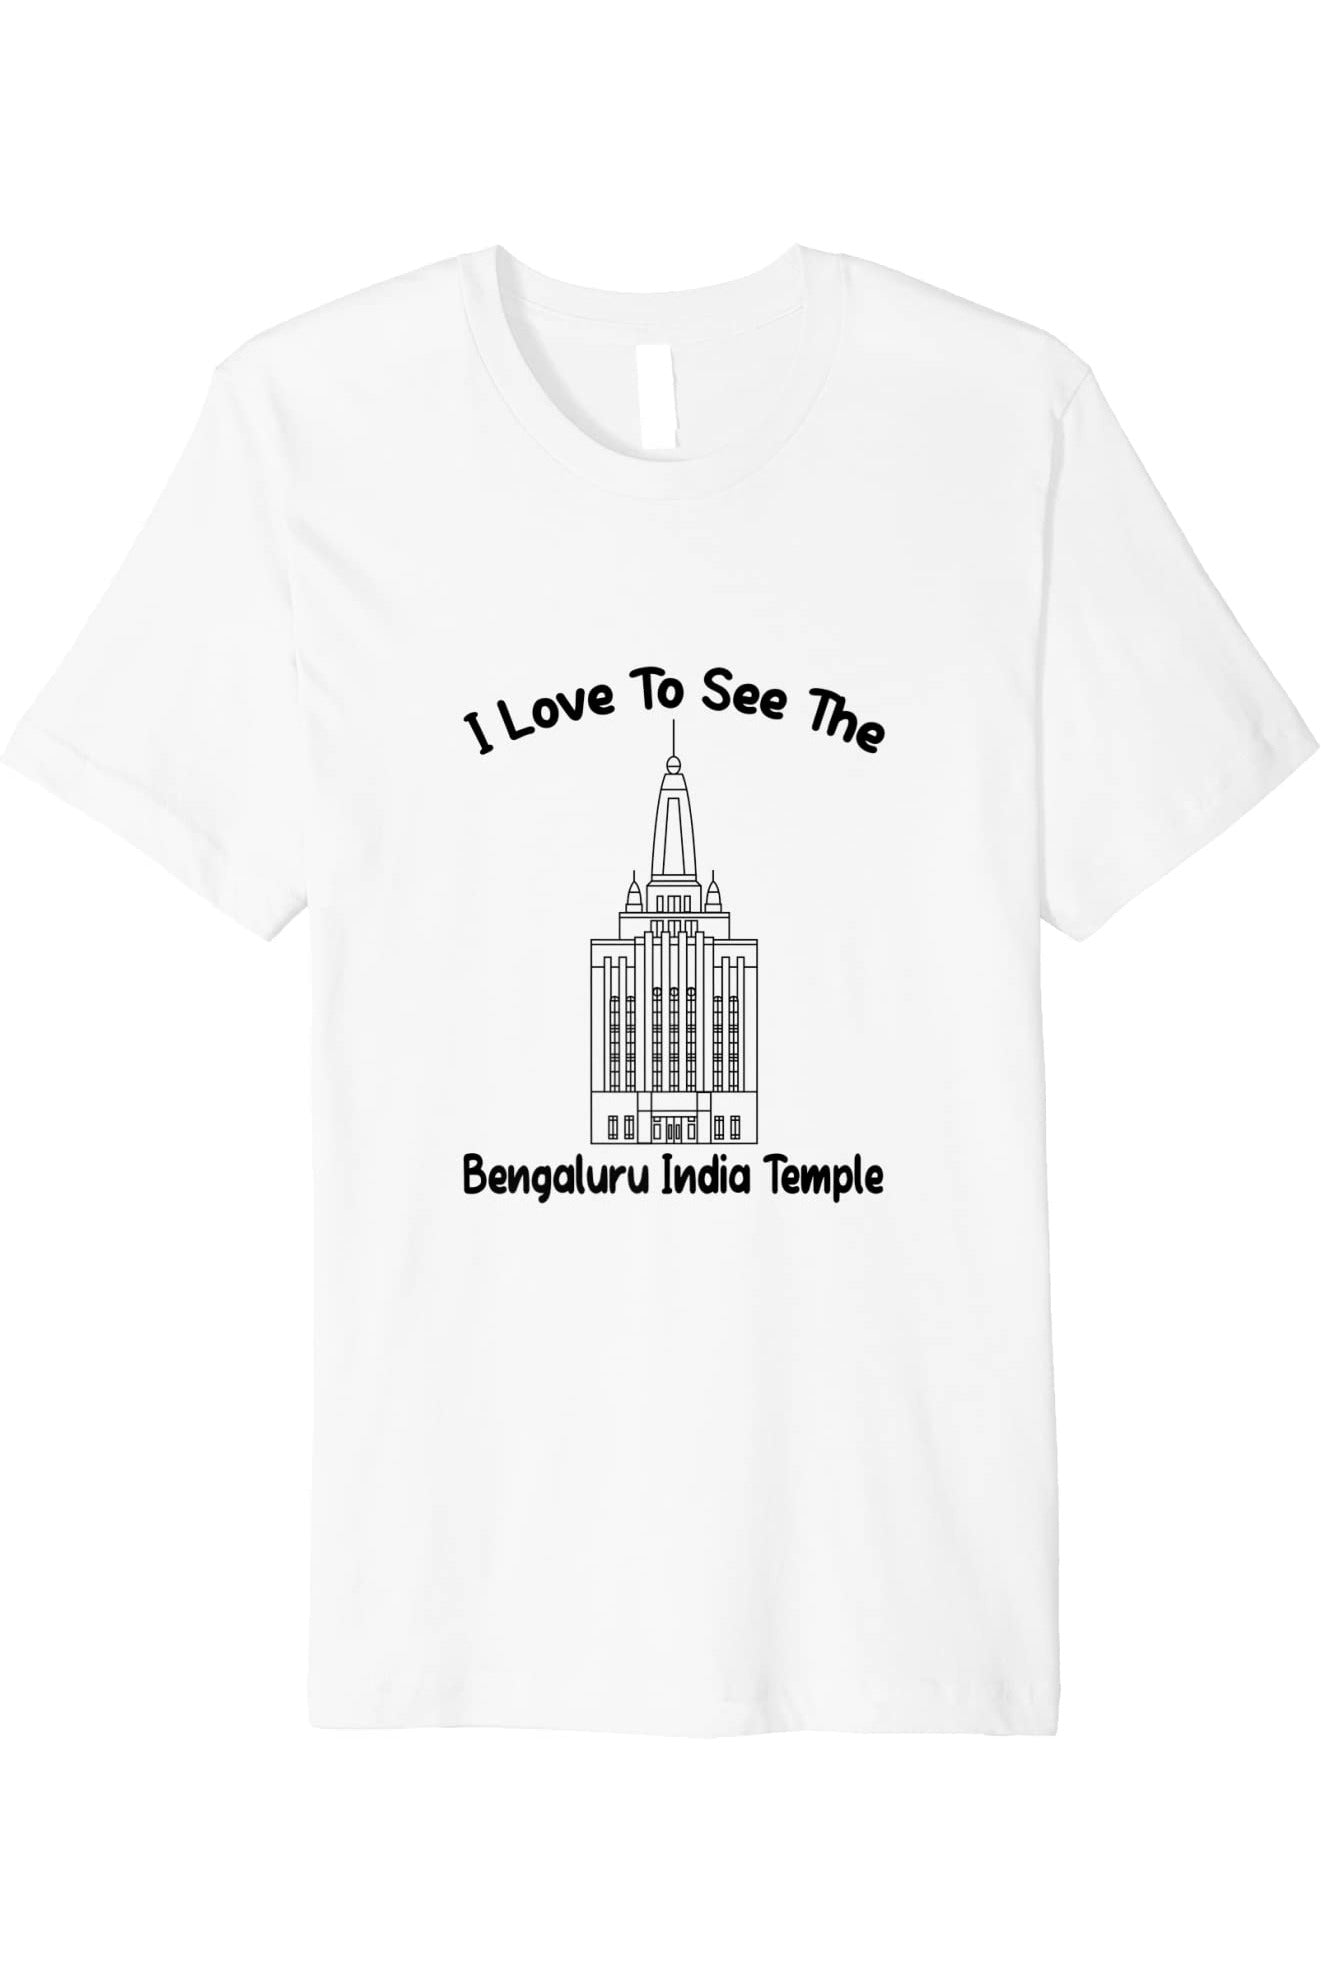 Bengaluru India Temple T-Shirt - Premium - Primary Style (English) US